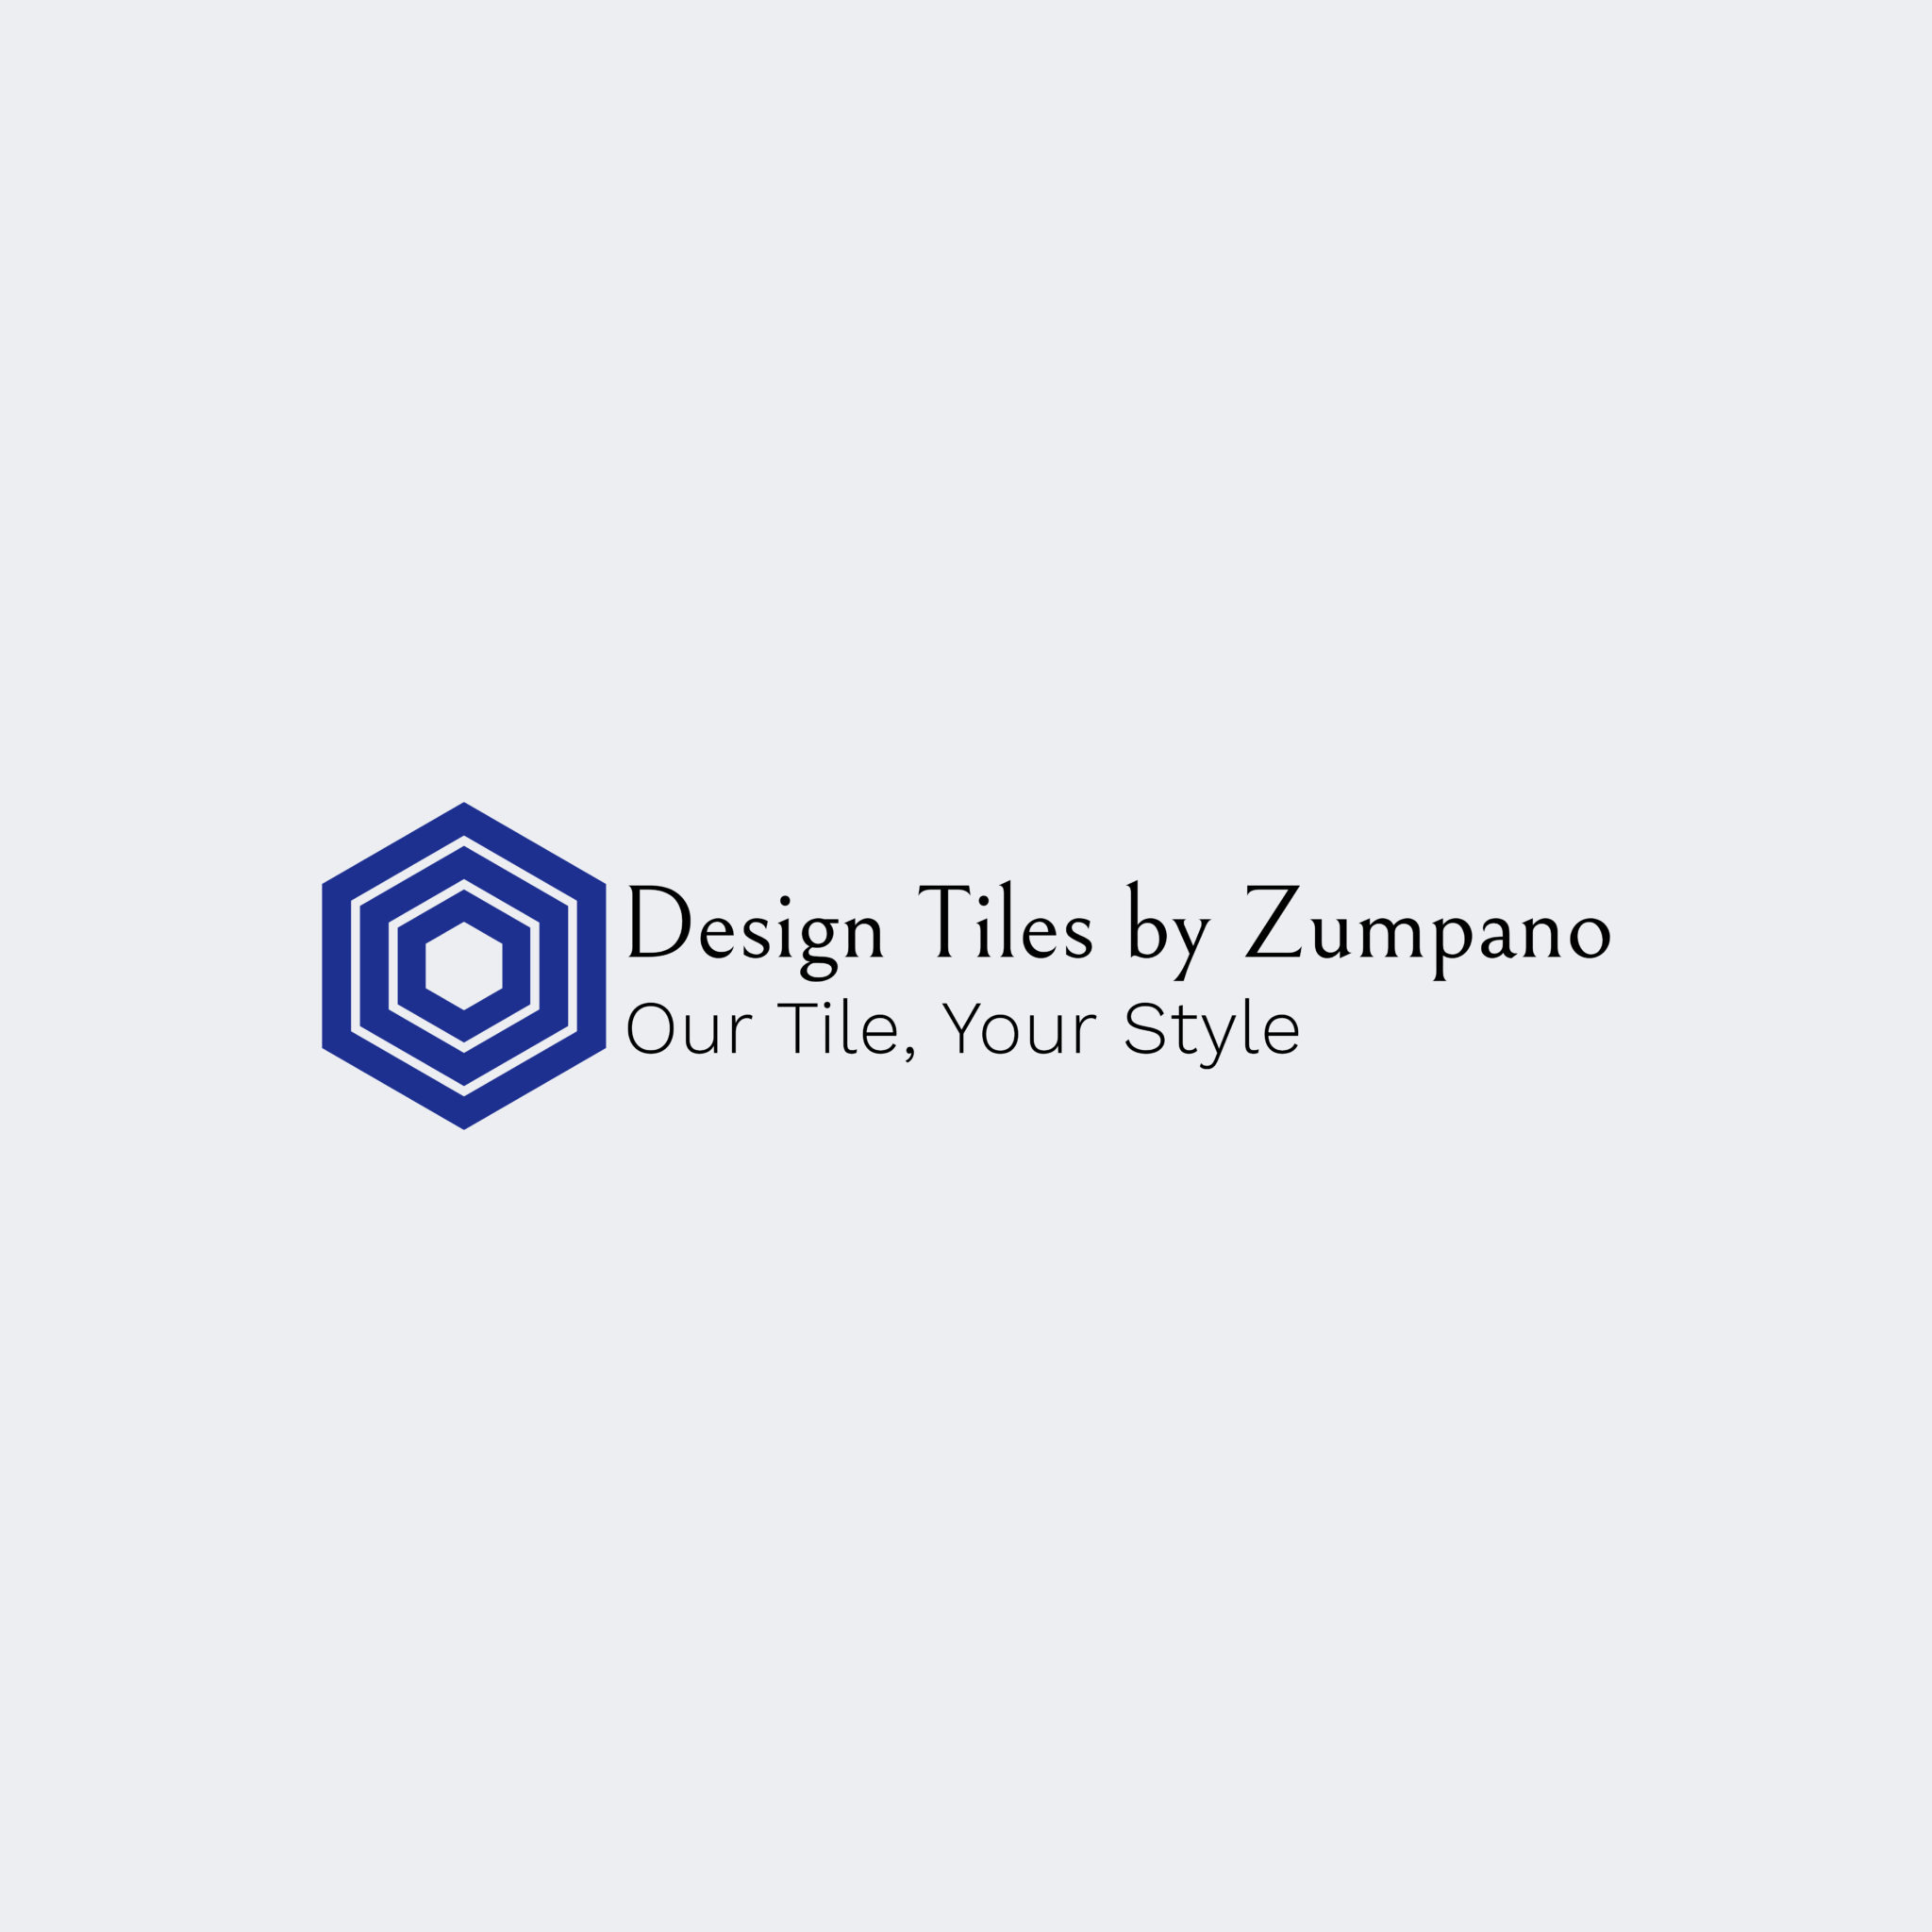 Collections A-Z - Design Tiles by Zumpano